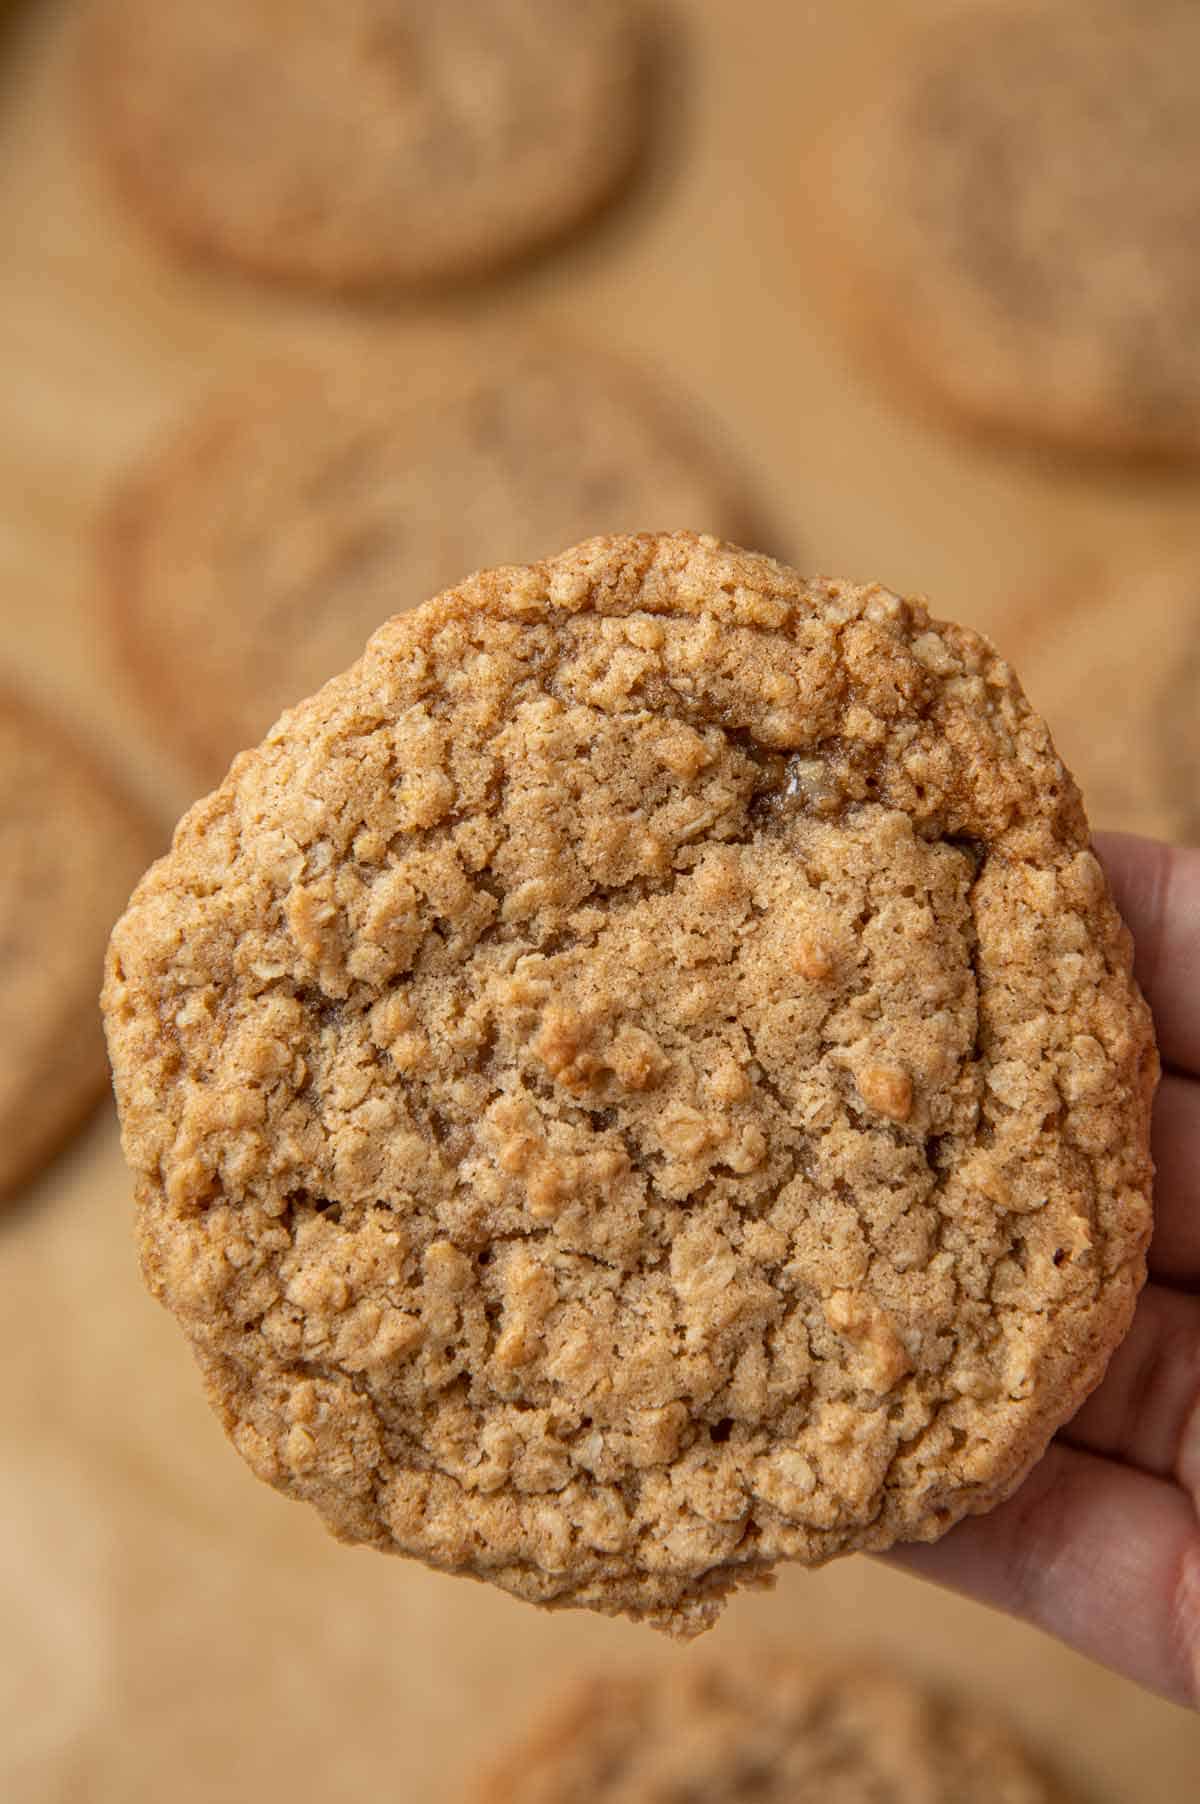 Oatmeal Cookies in hand